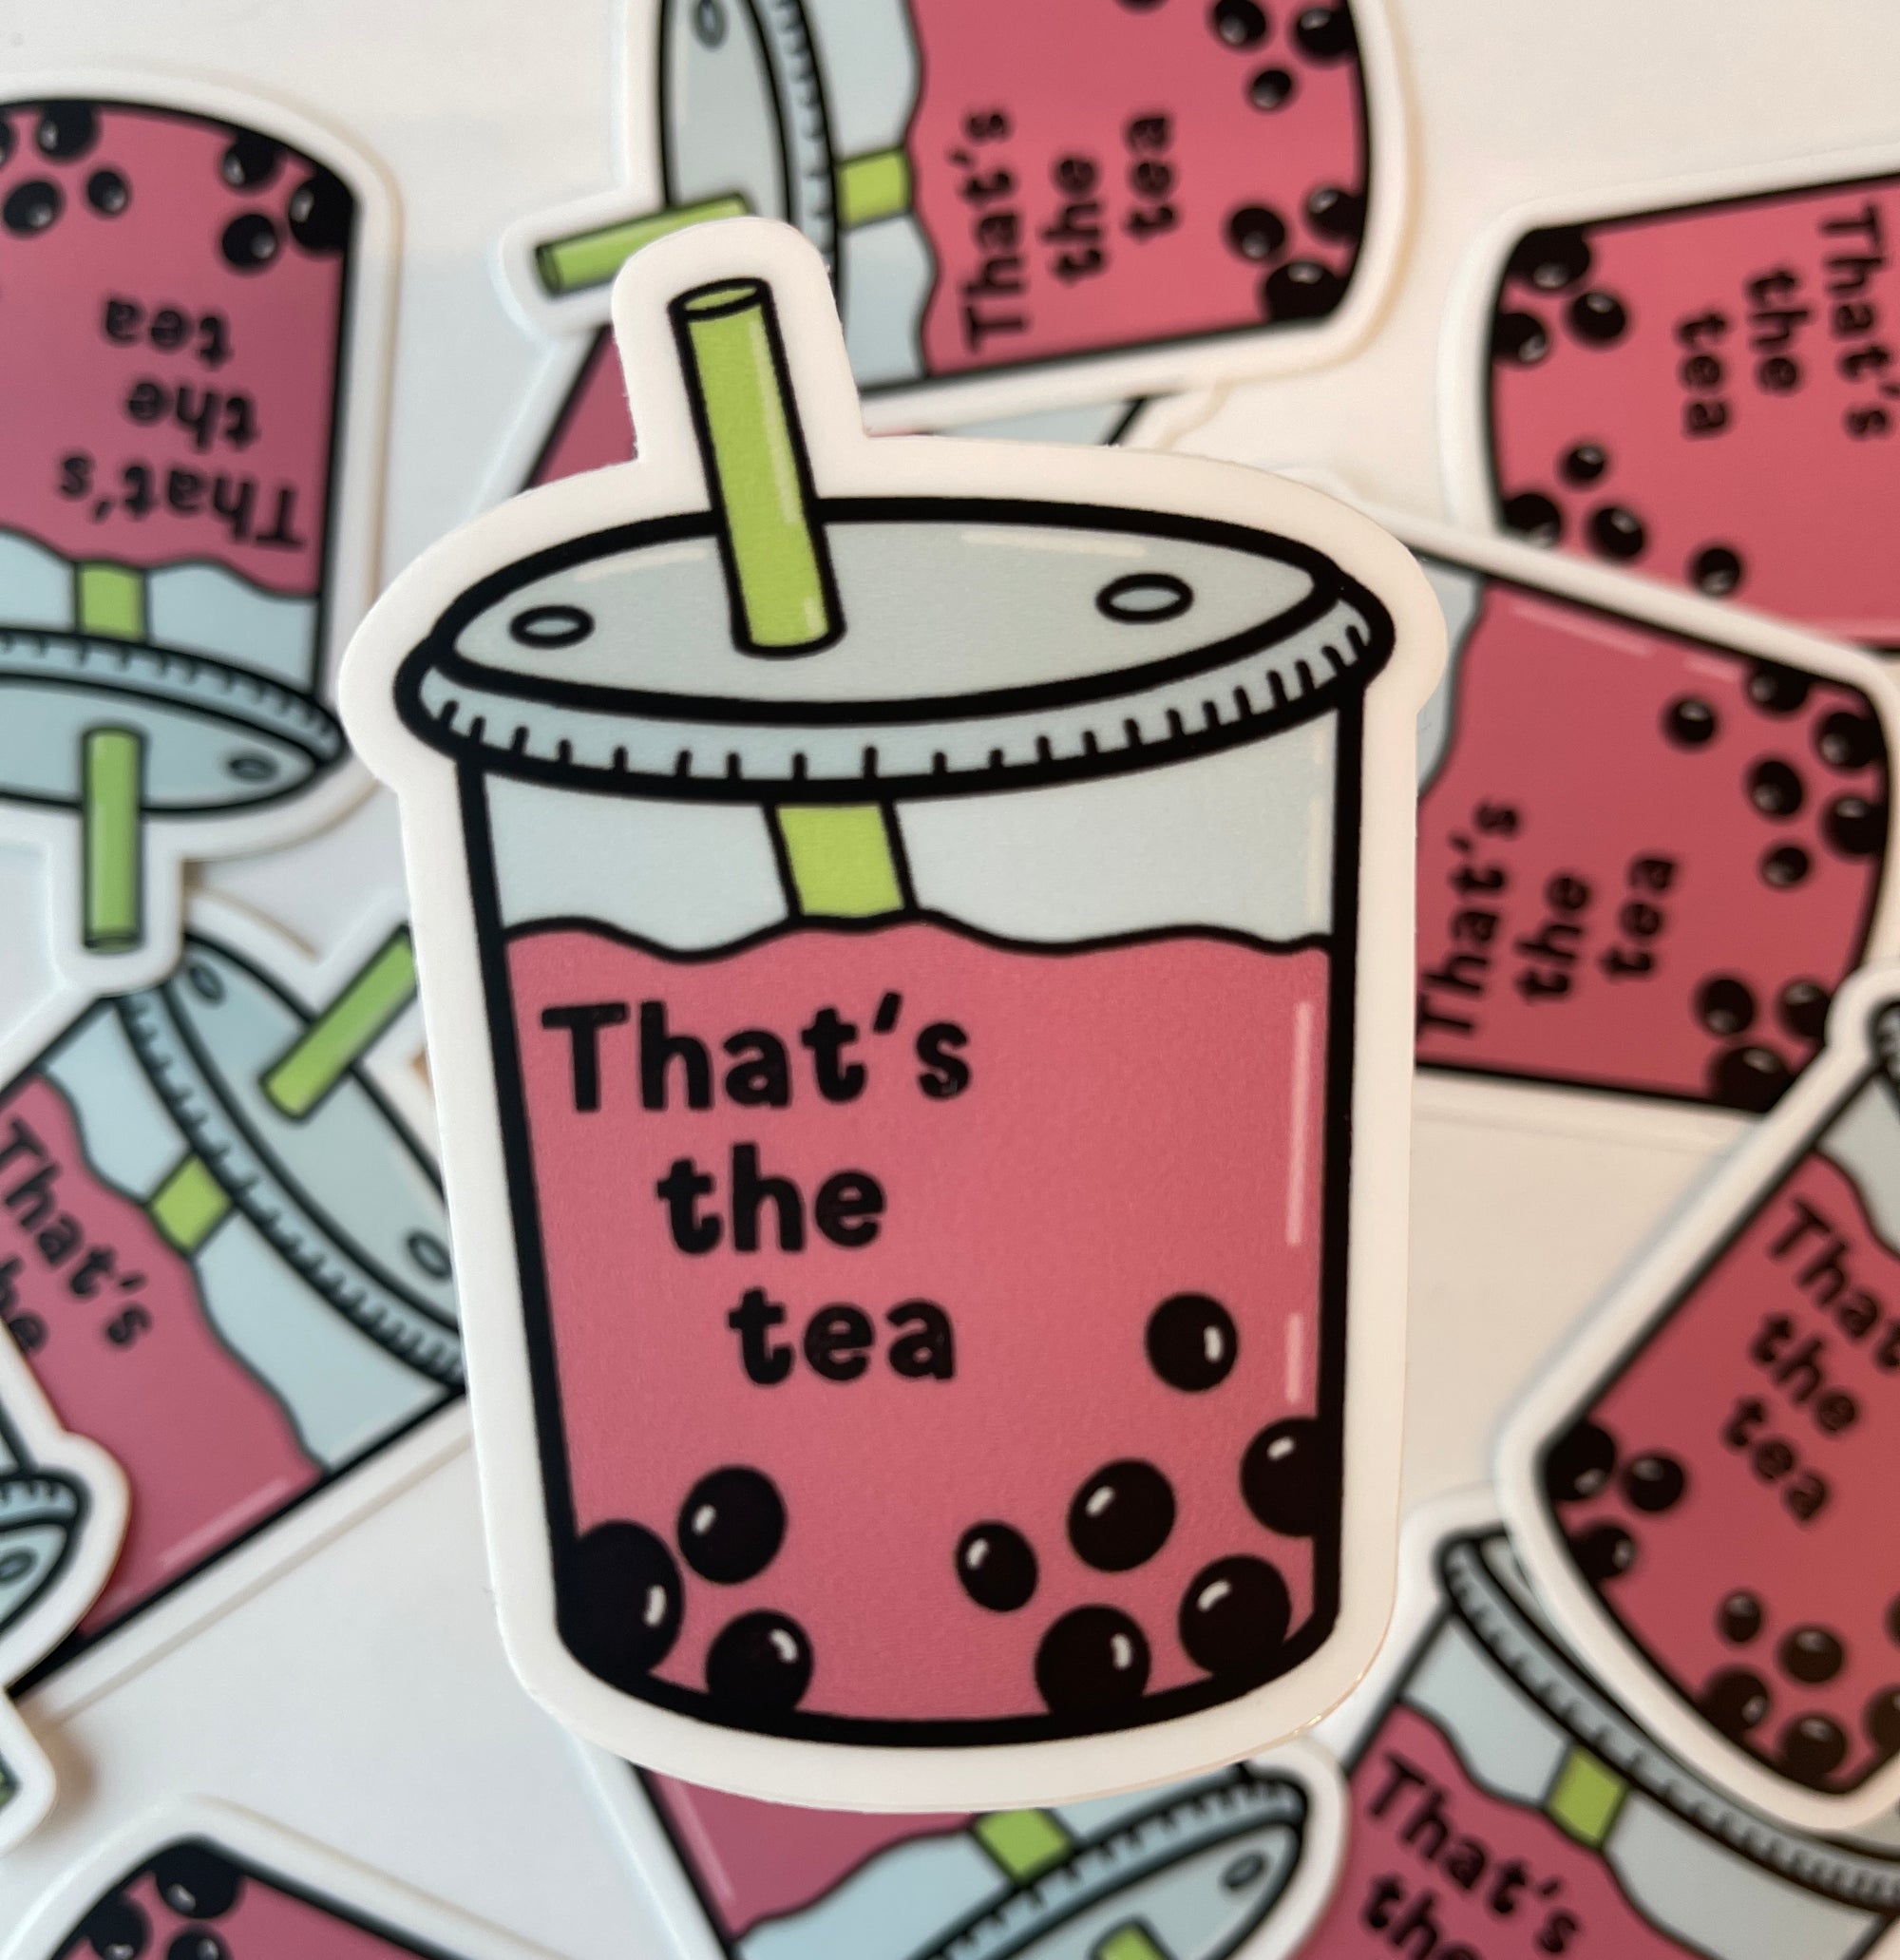 “That’s The Tea” Boba Drink Vinyl Sticker